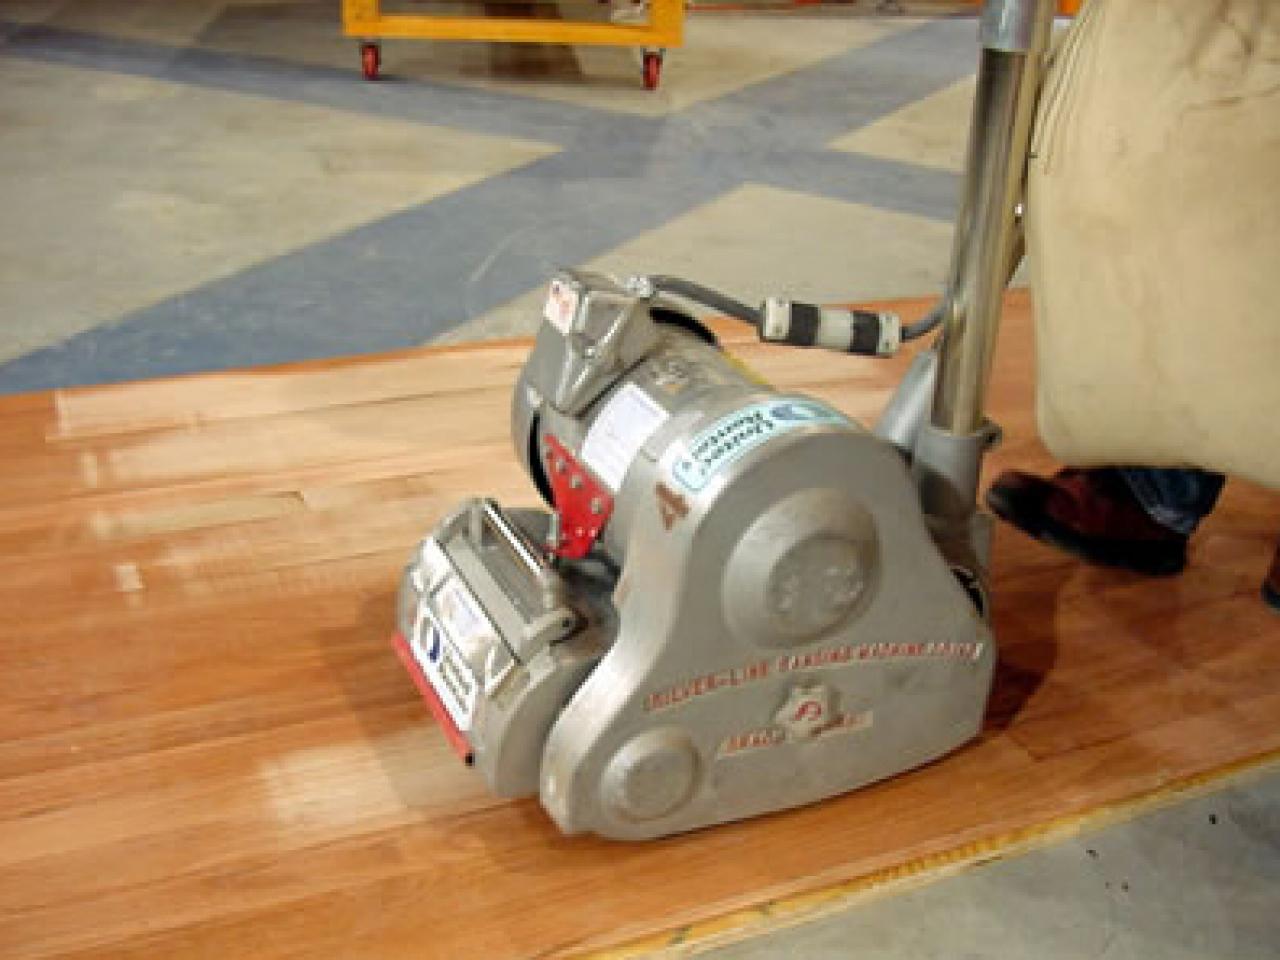 Drill Brushes And Floor Sander How To, Hardwood Floor Sanding Machine